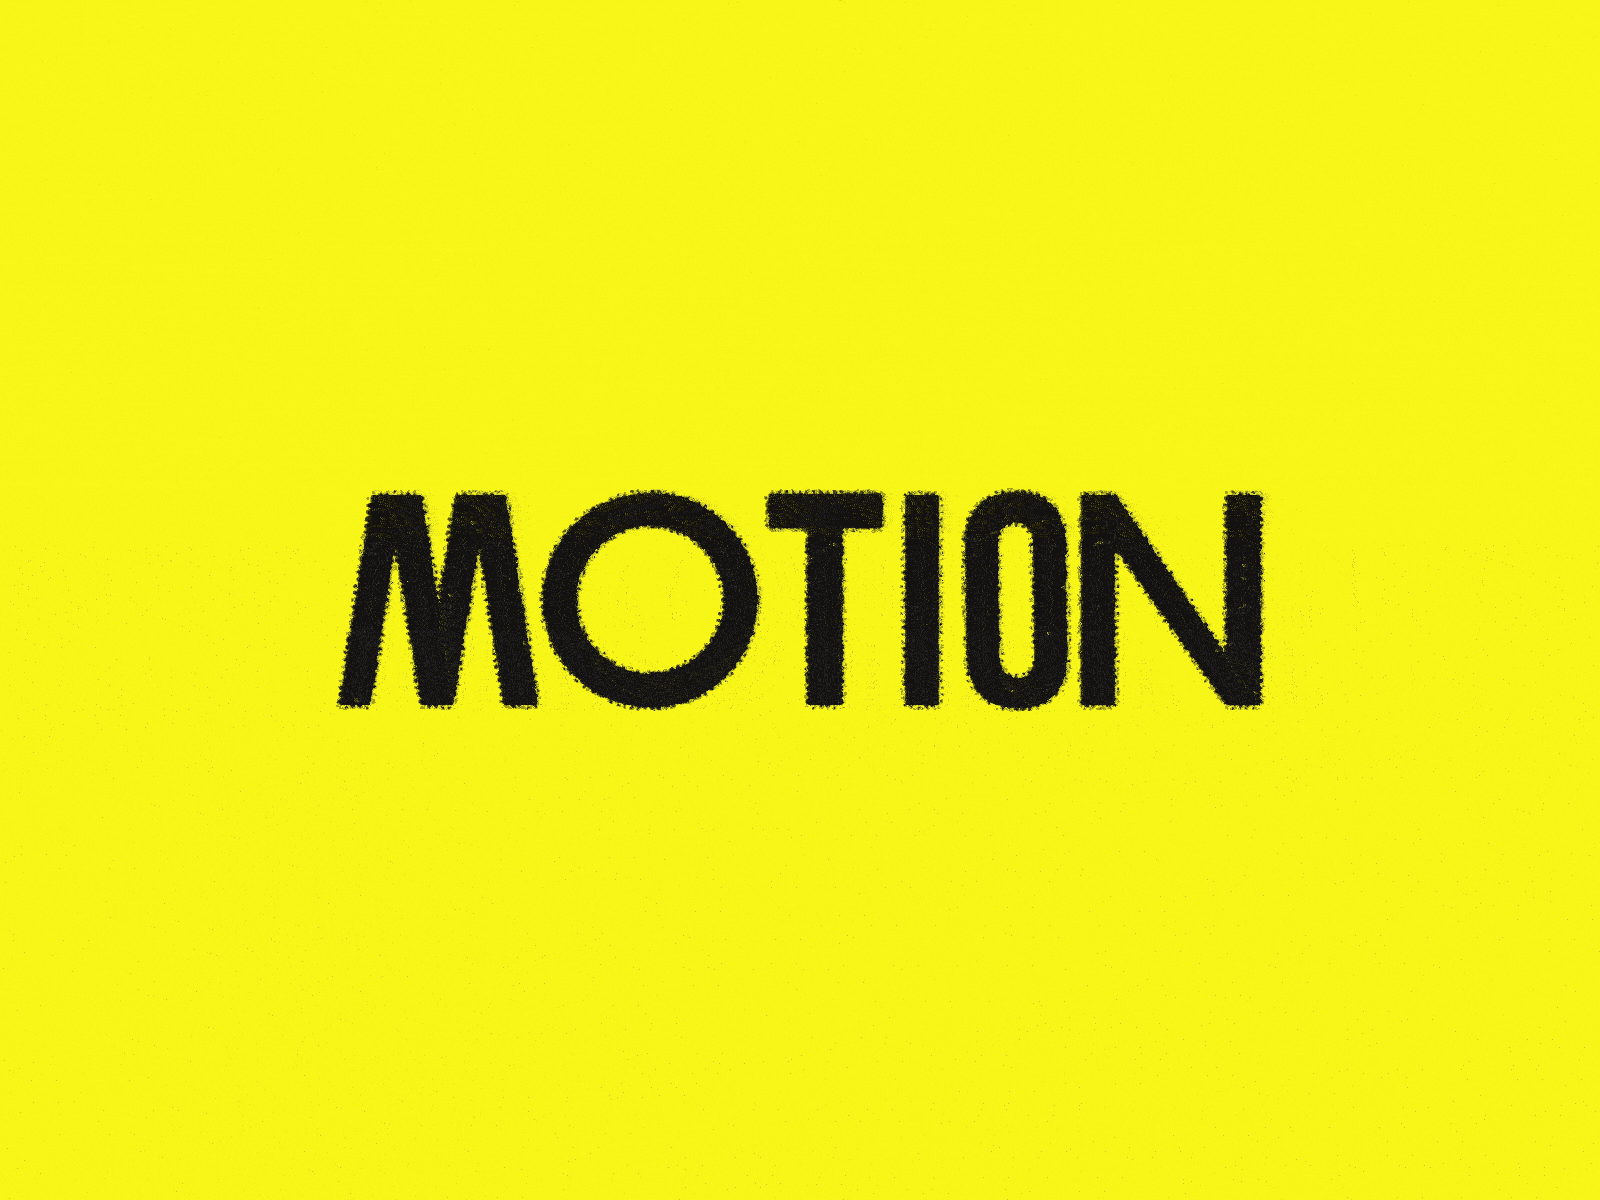 Motion Animation